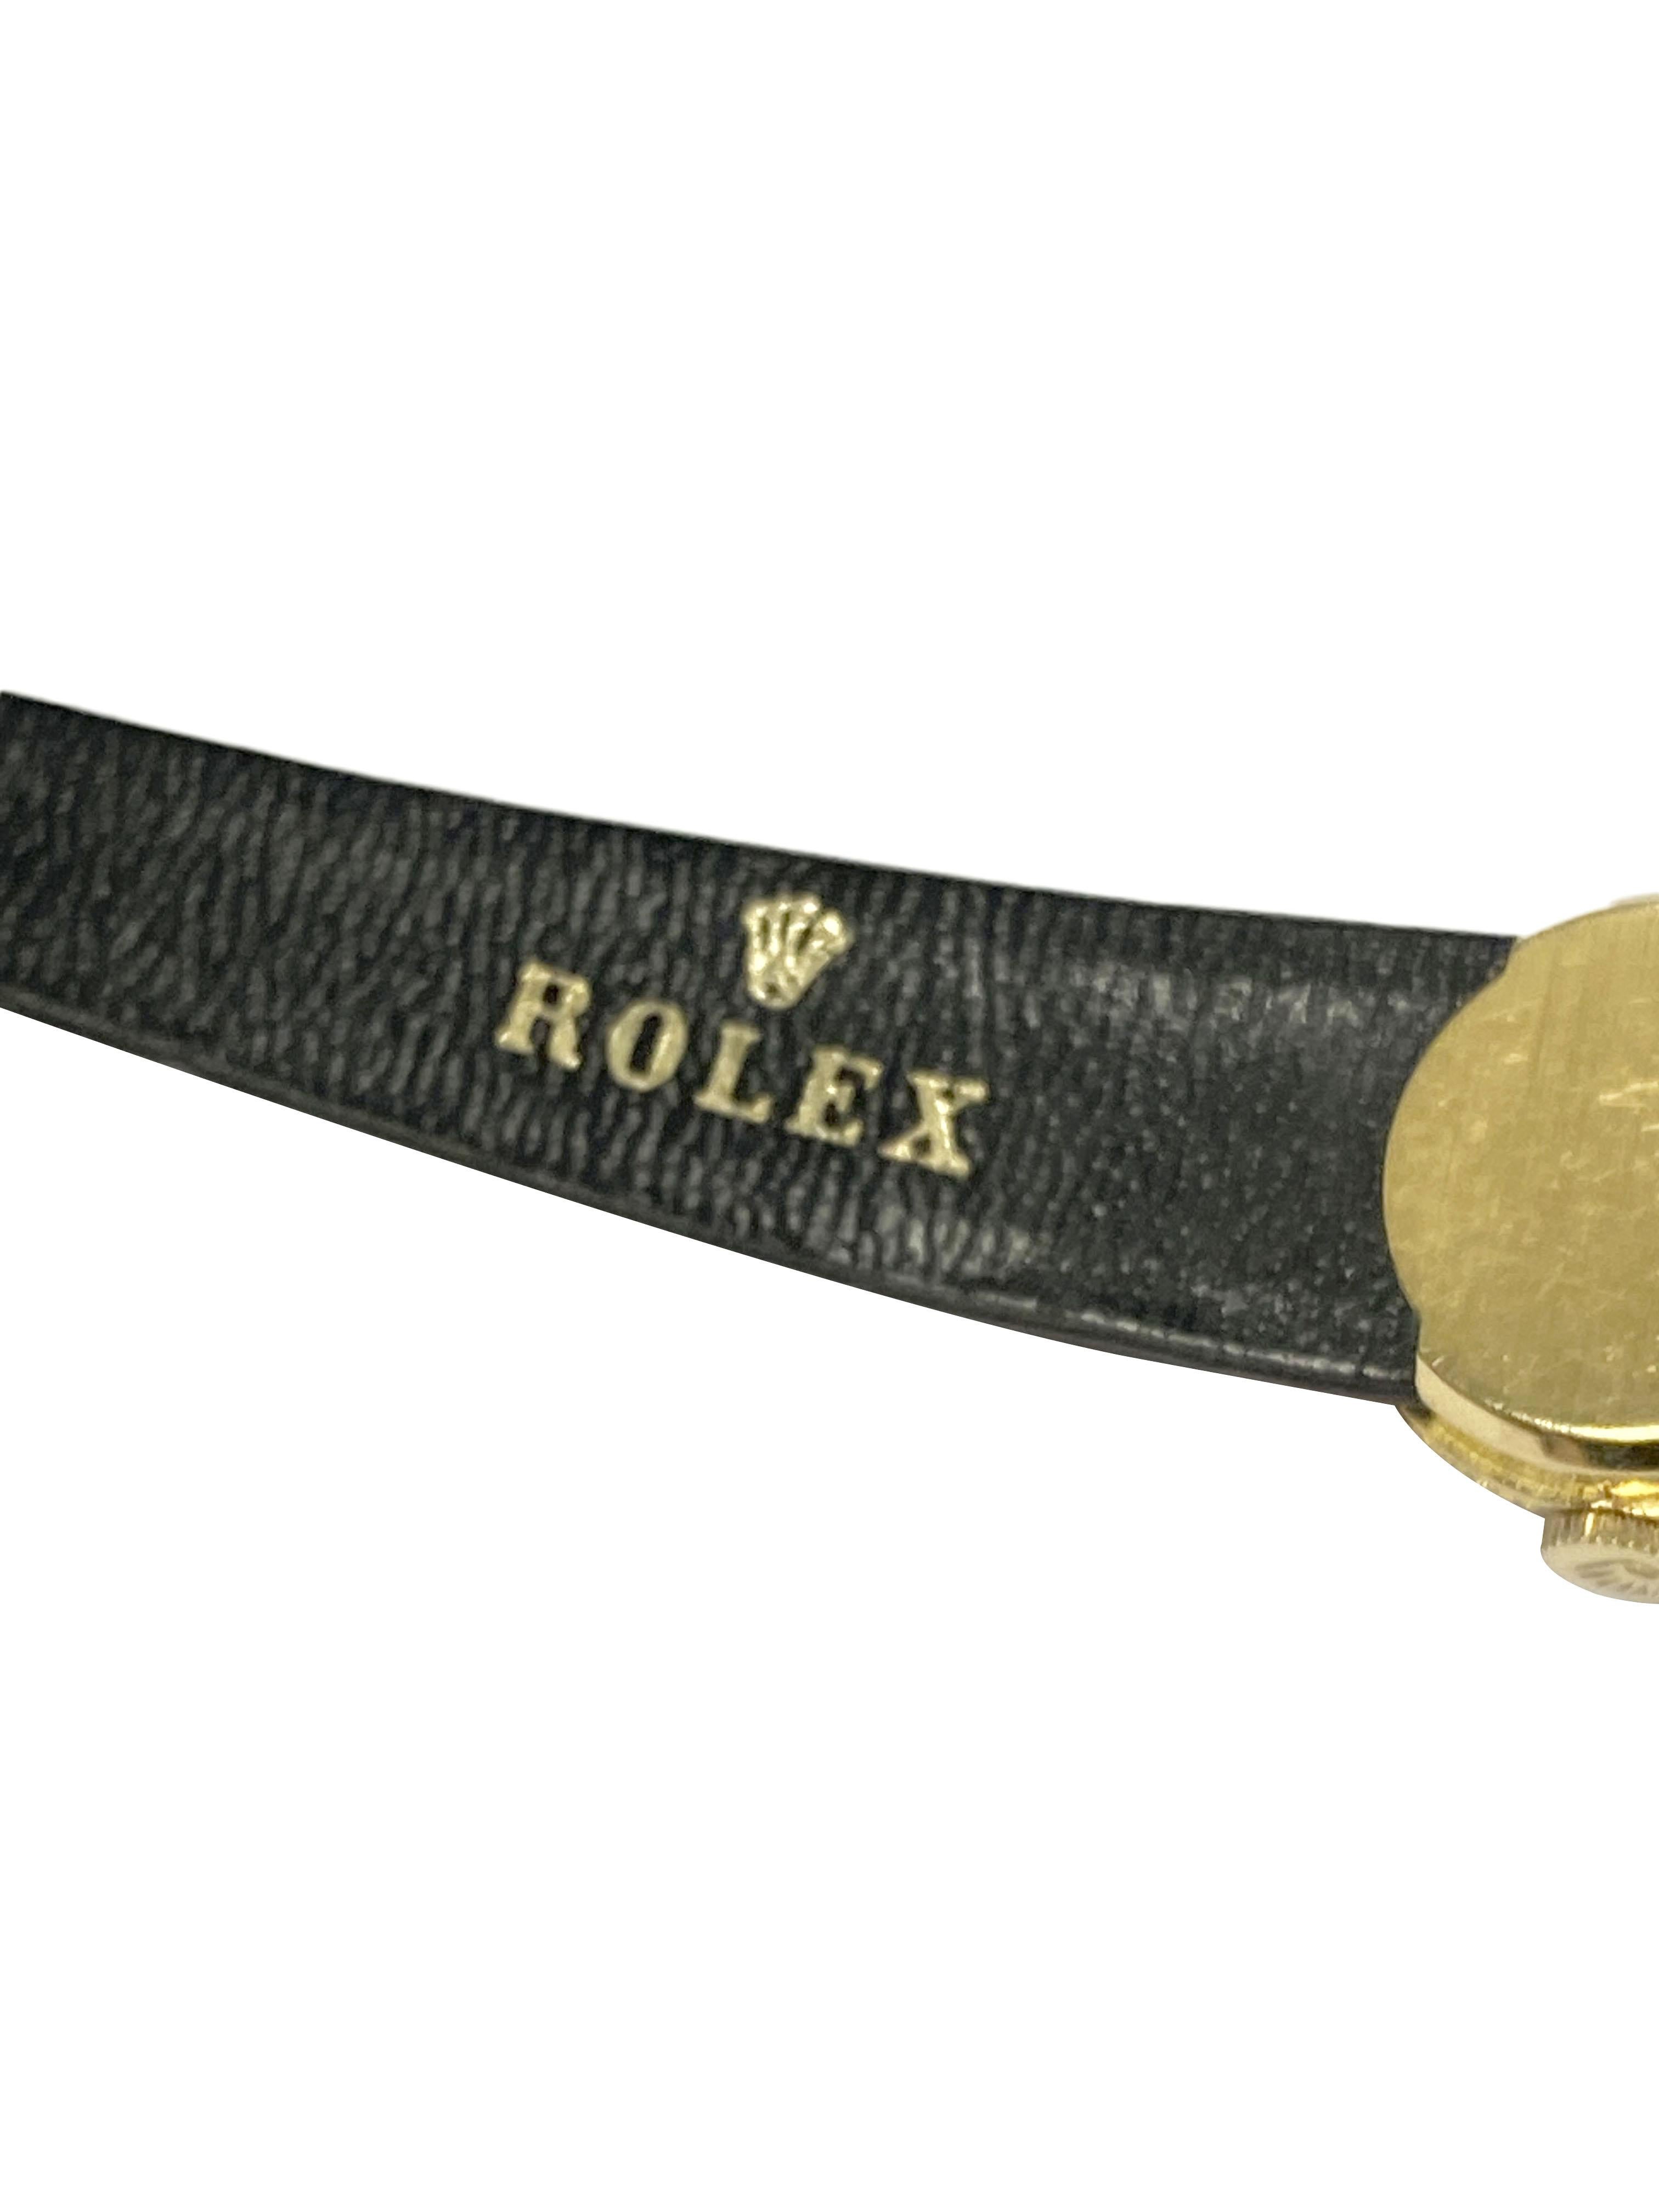 Rolex Vintage Orchid Ladies 18k Yellow Gold Mechanical Wrist Watch 3